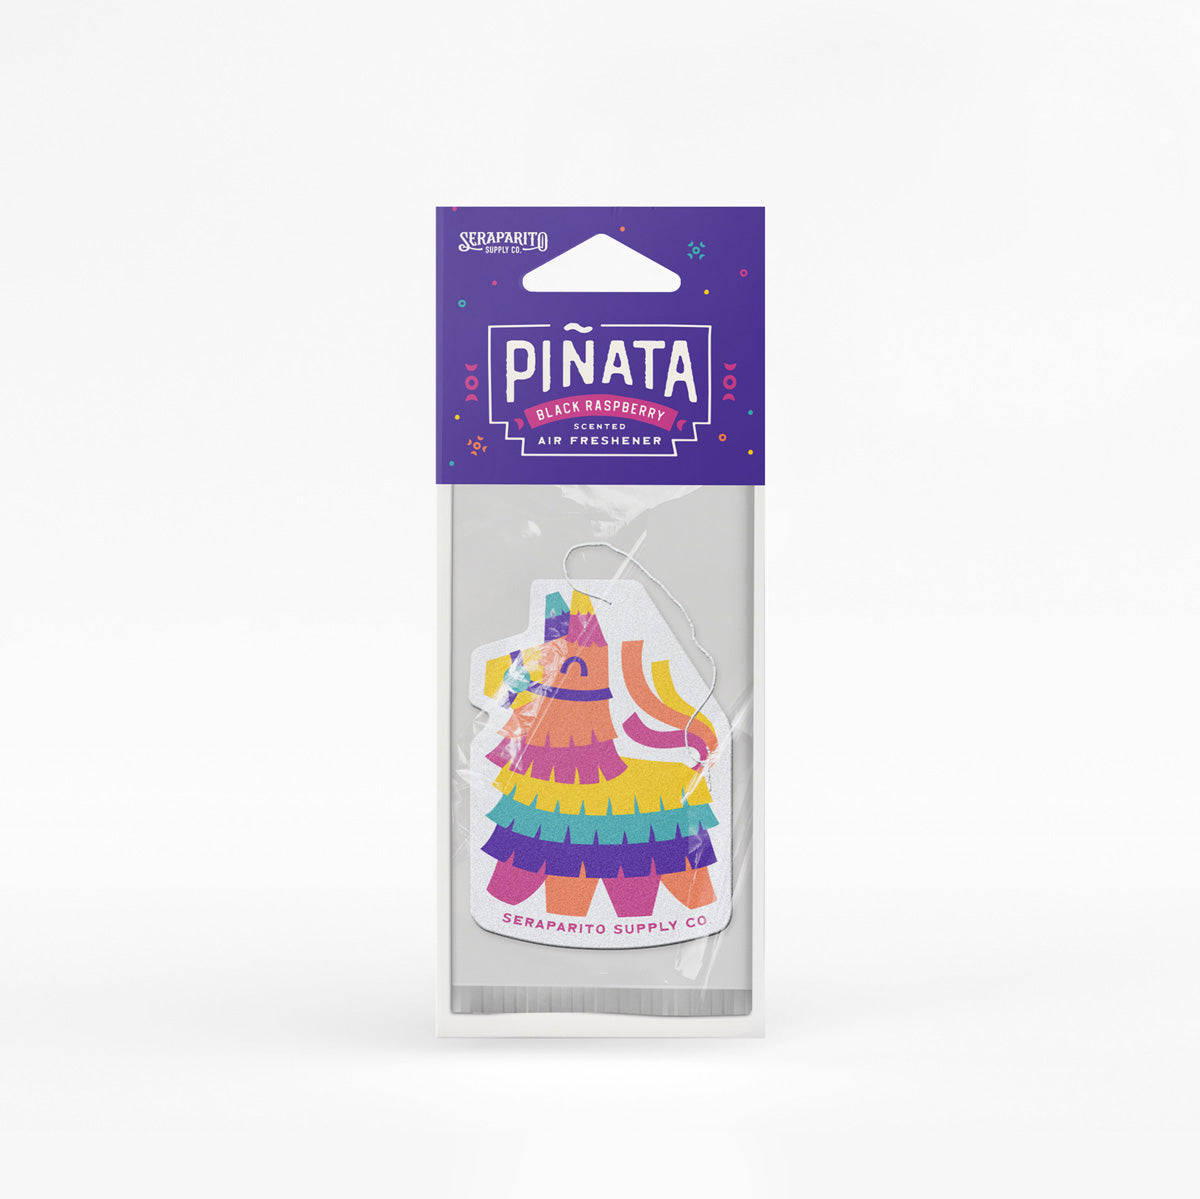 Piñata Air Freshener